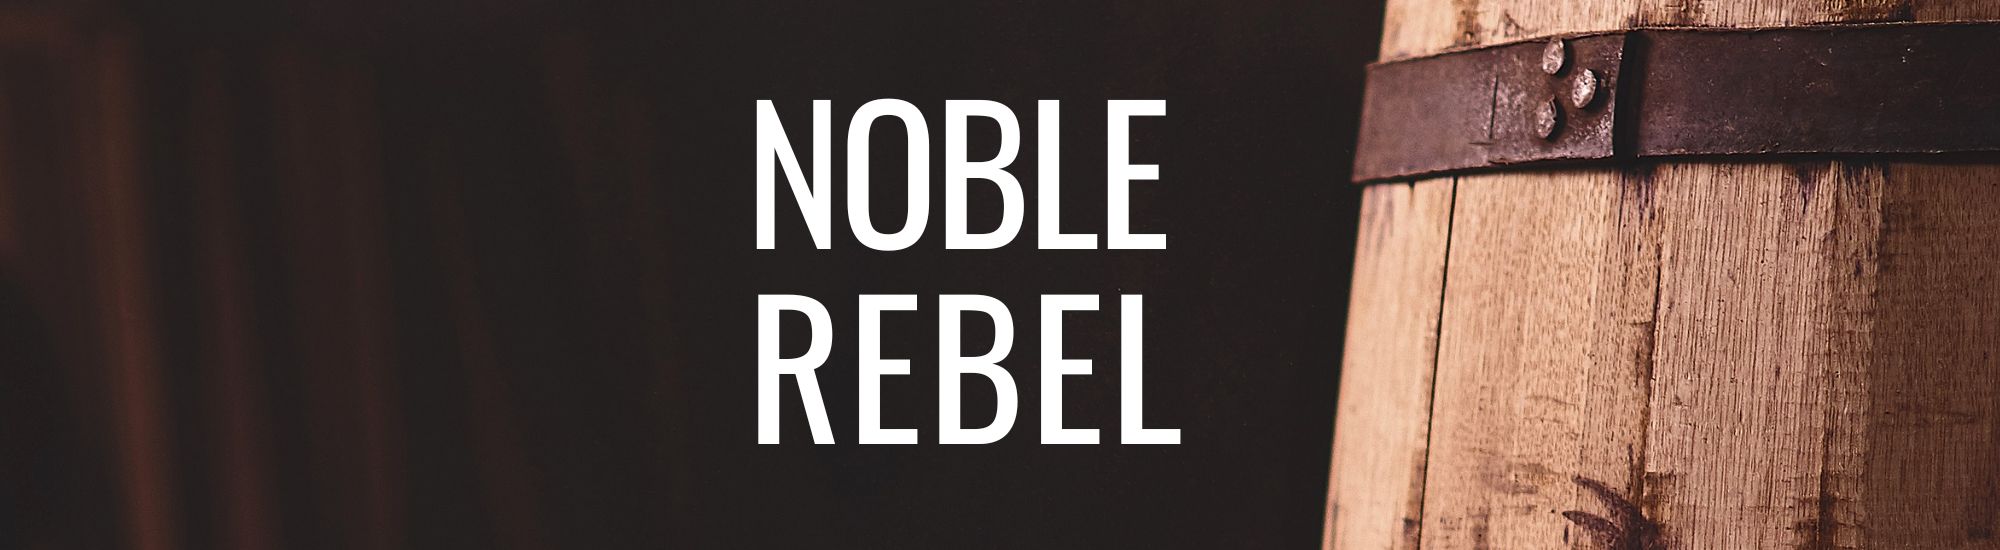 noble rebel